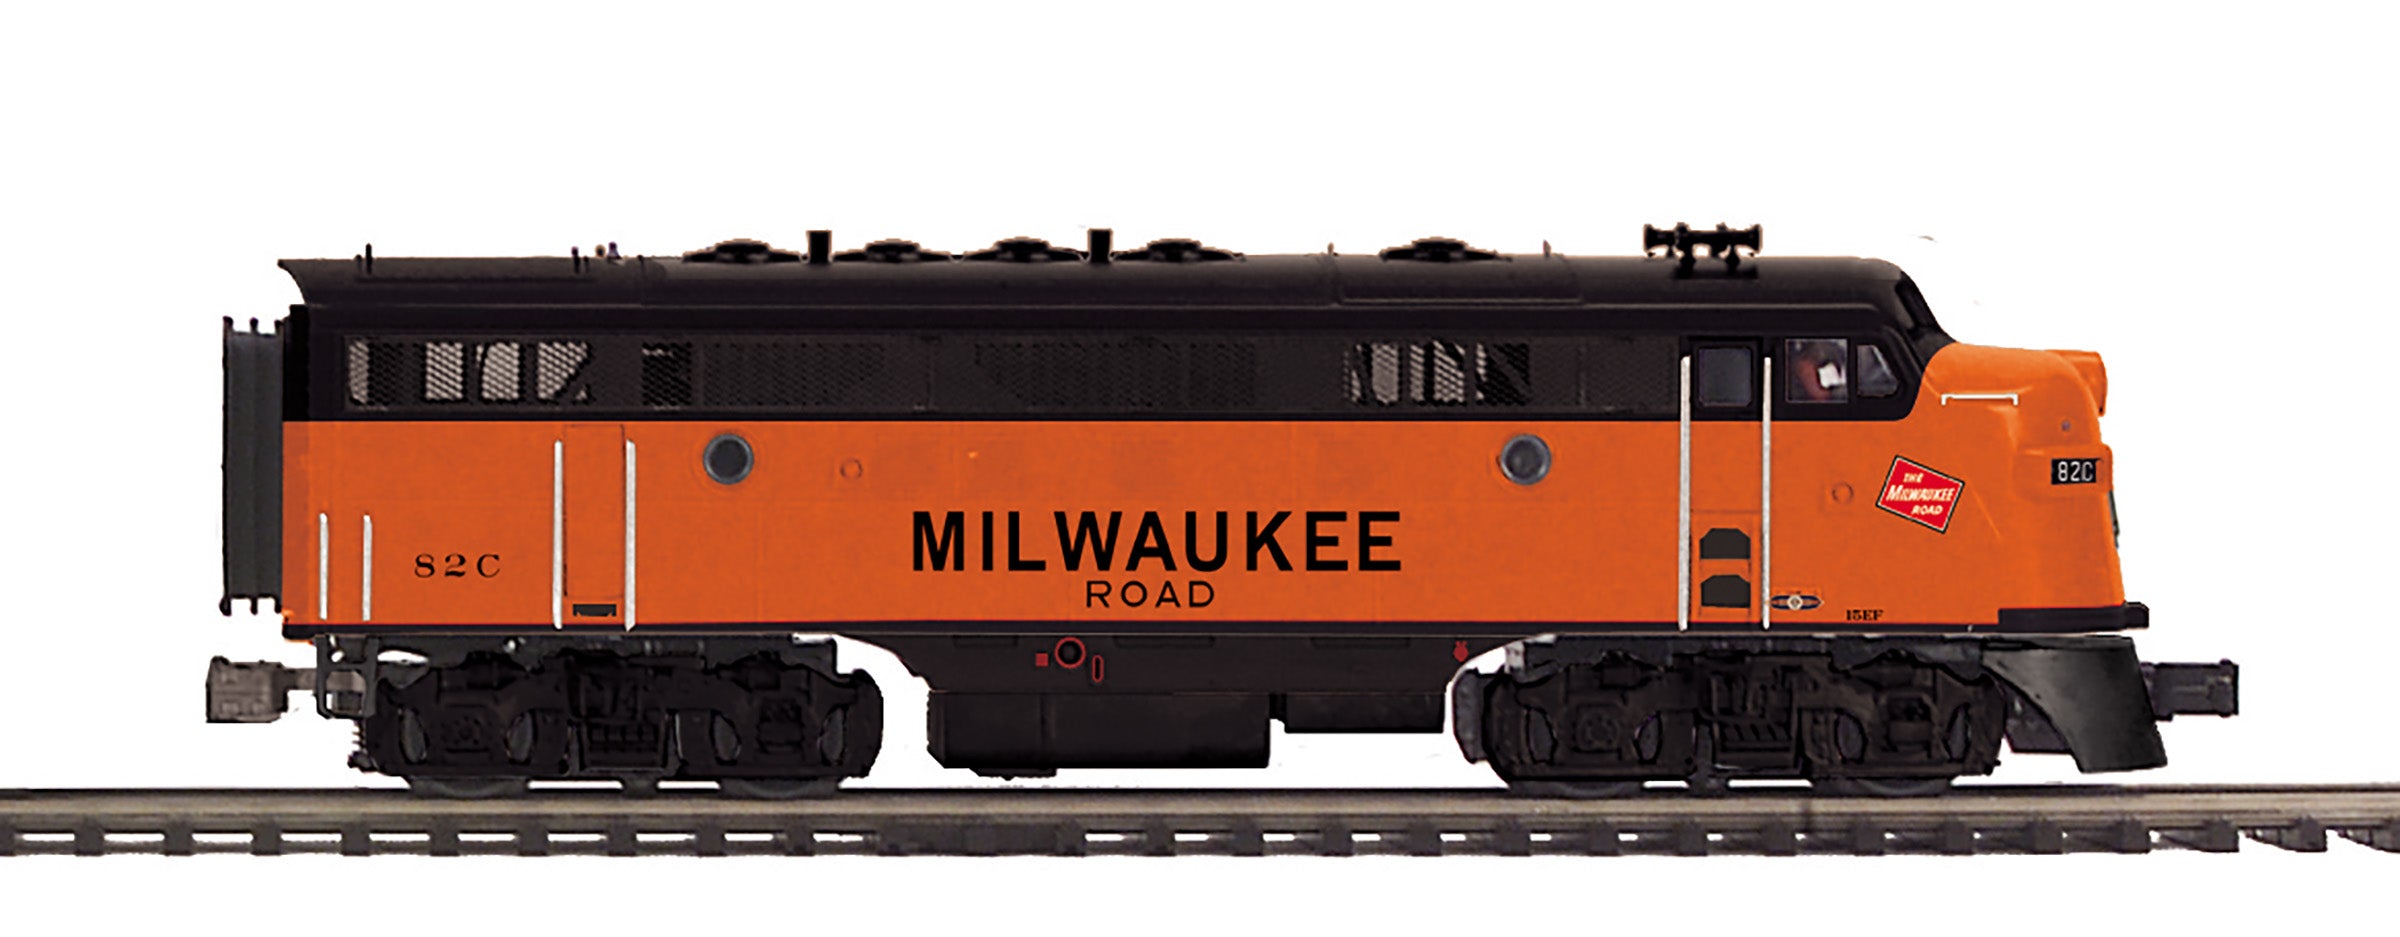 MTH 20-21826-1 - F-7 A Unit Diesel Engine "Milwaukee Road" #82C w/ PS3 (Hi-Rail Wheels) - Custom Run for MrMuffin'sTrains